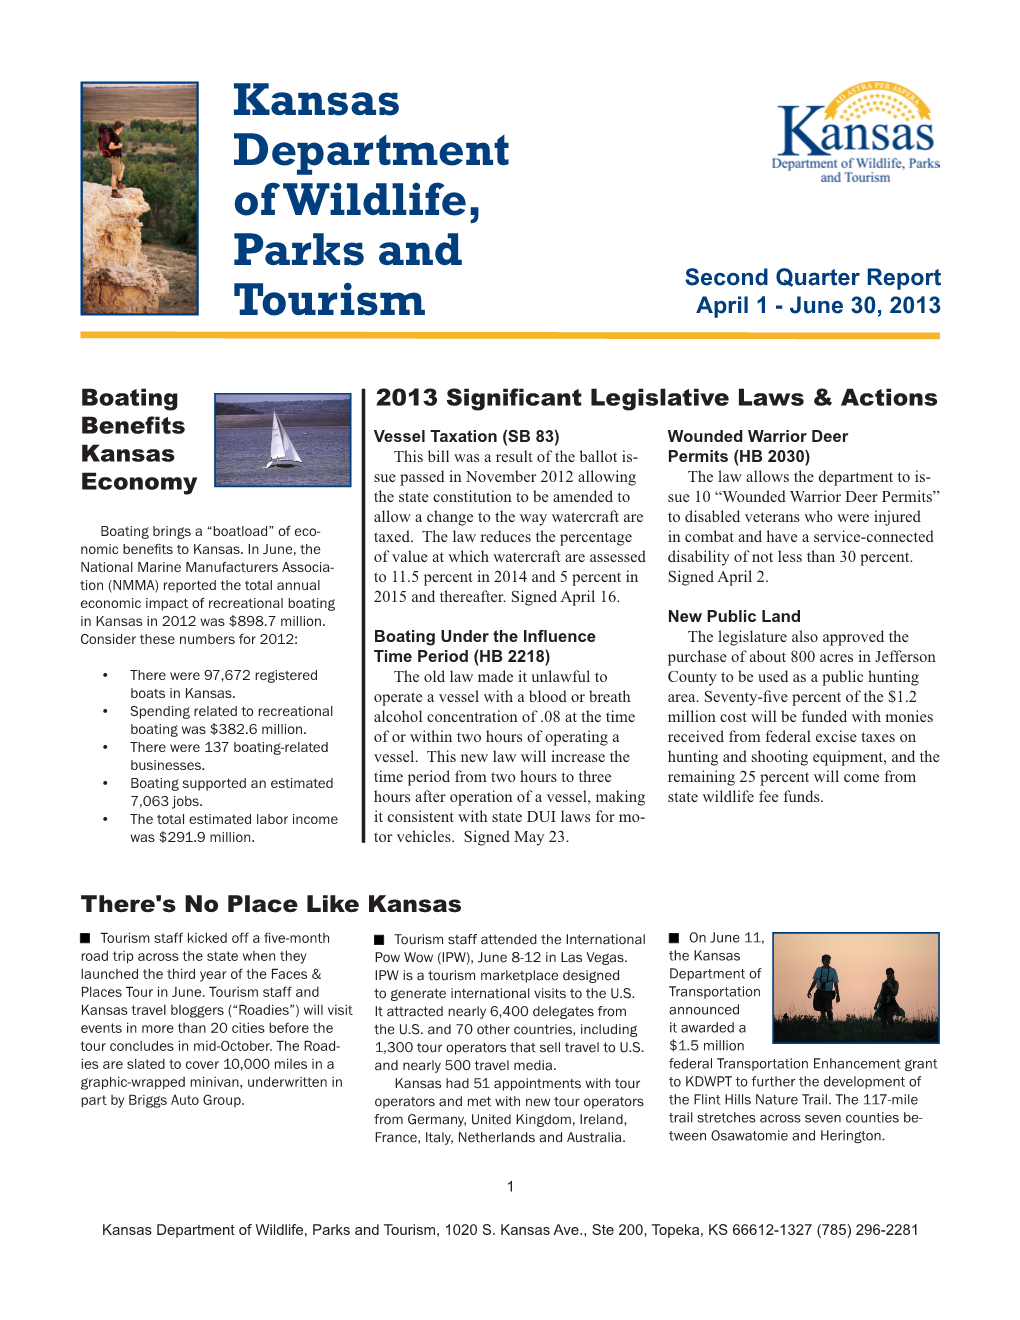 Kansas Department of Wildlife, Parks and Tourism, 1020 S